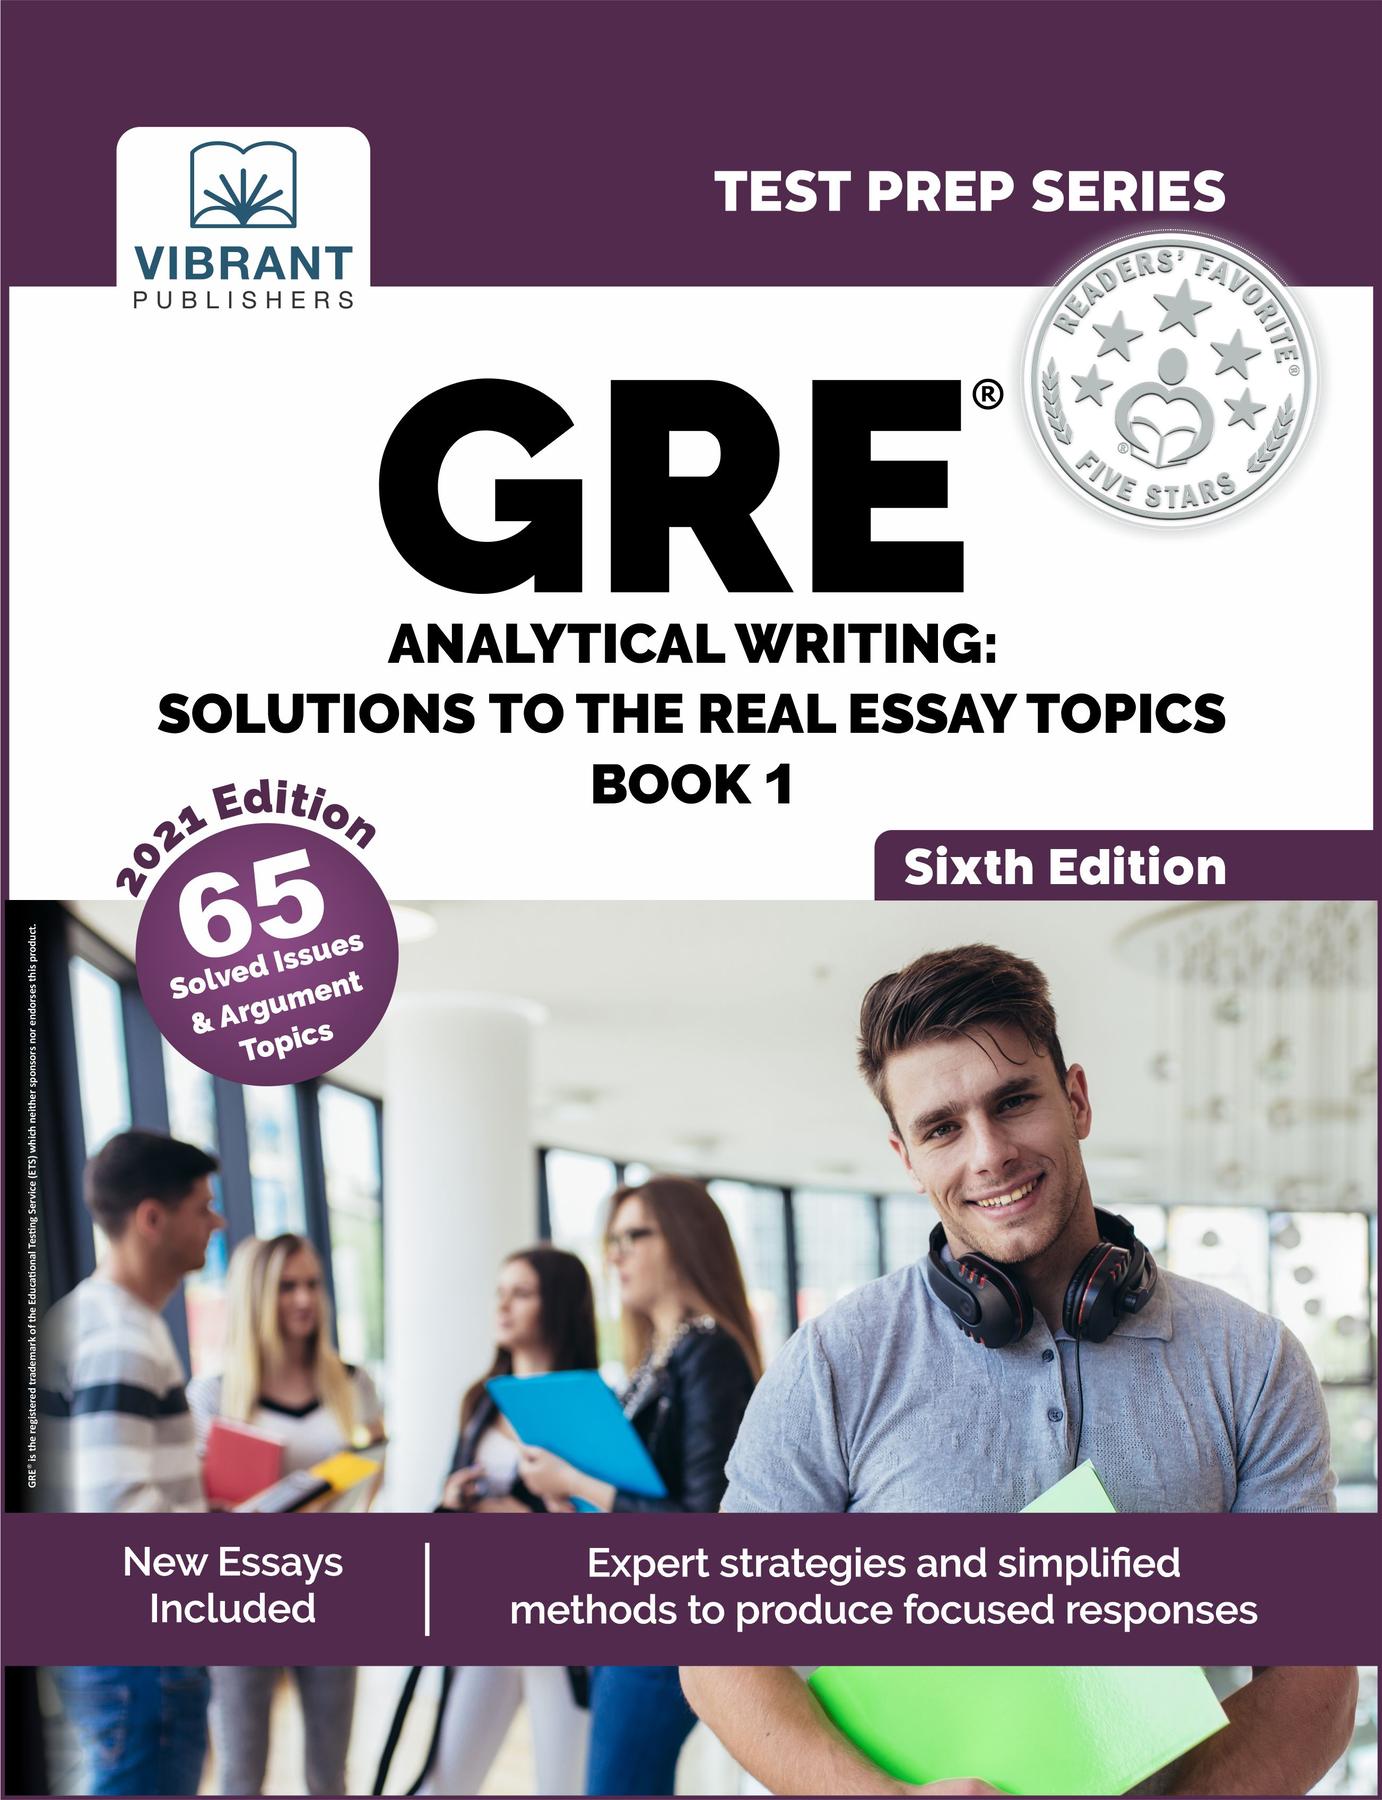 gre analytical writing bible pdf